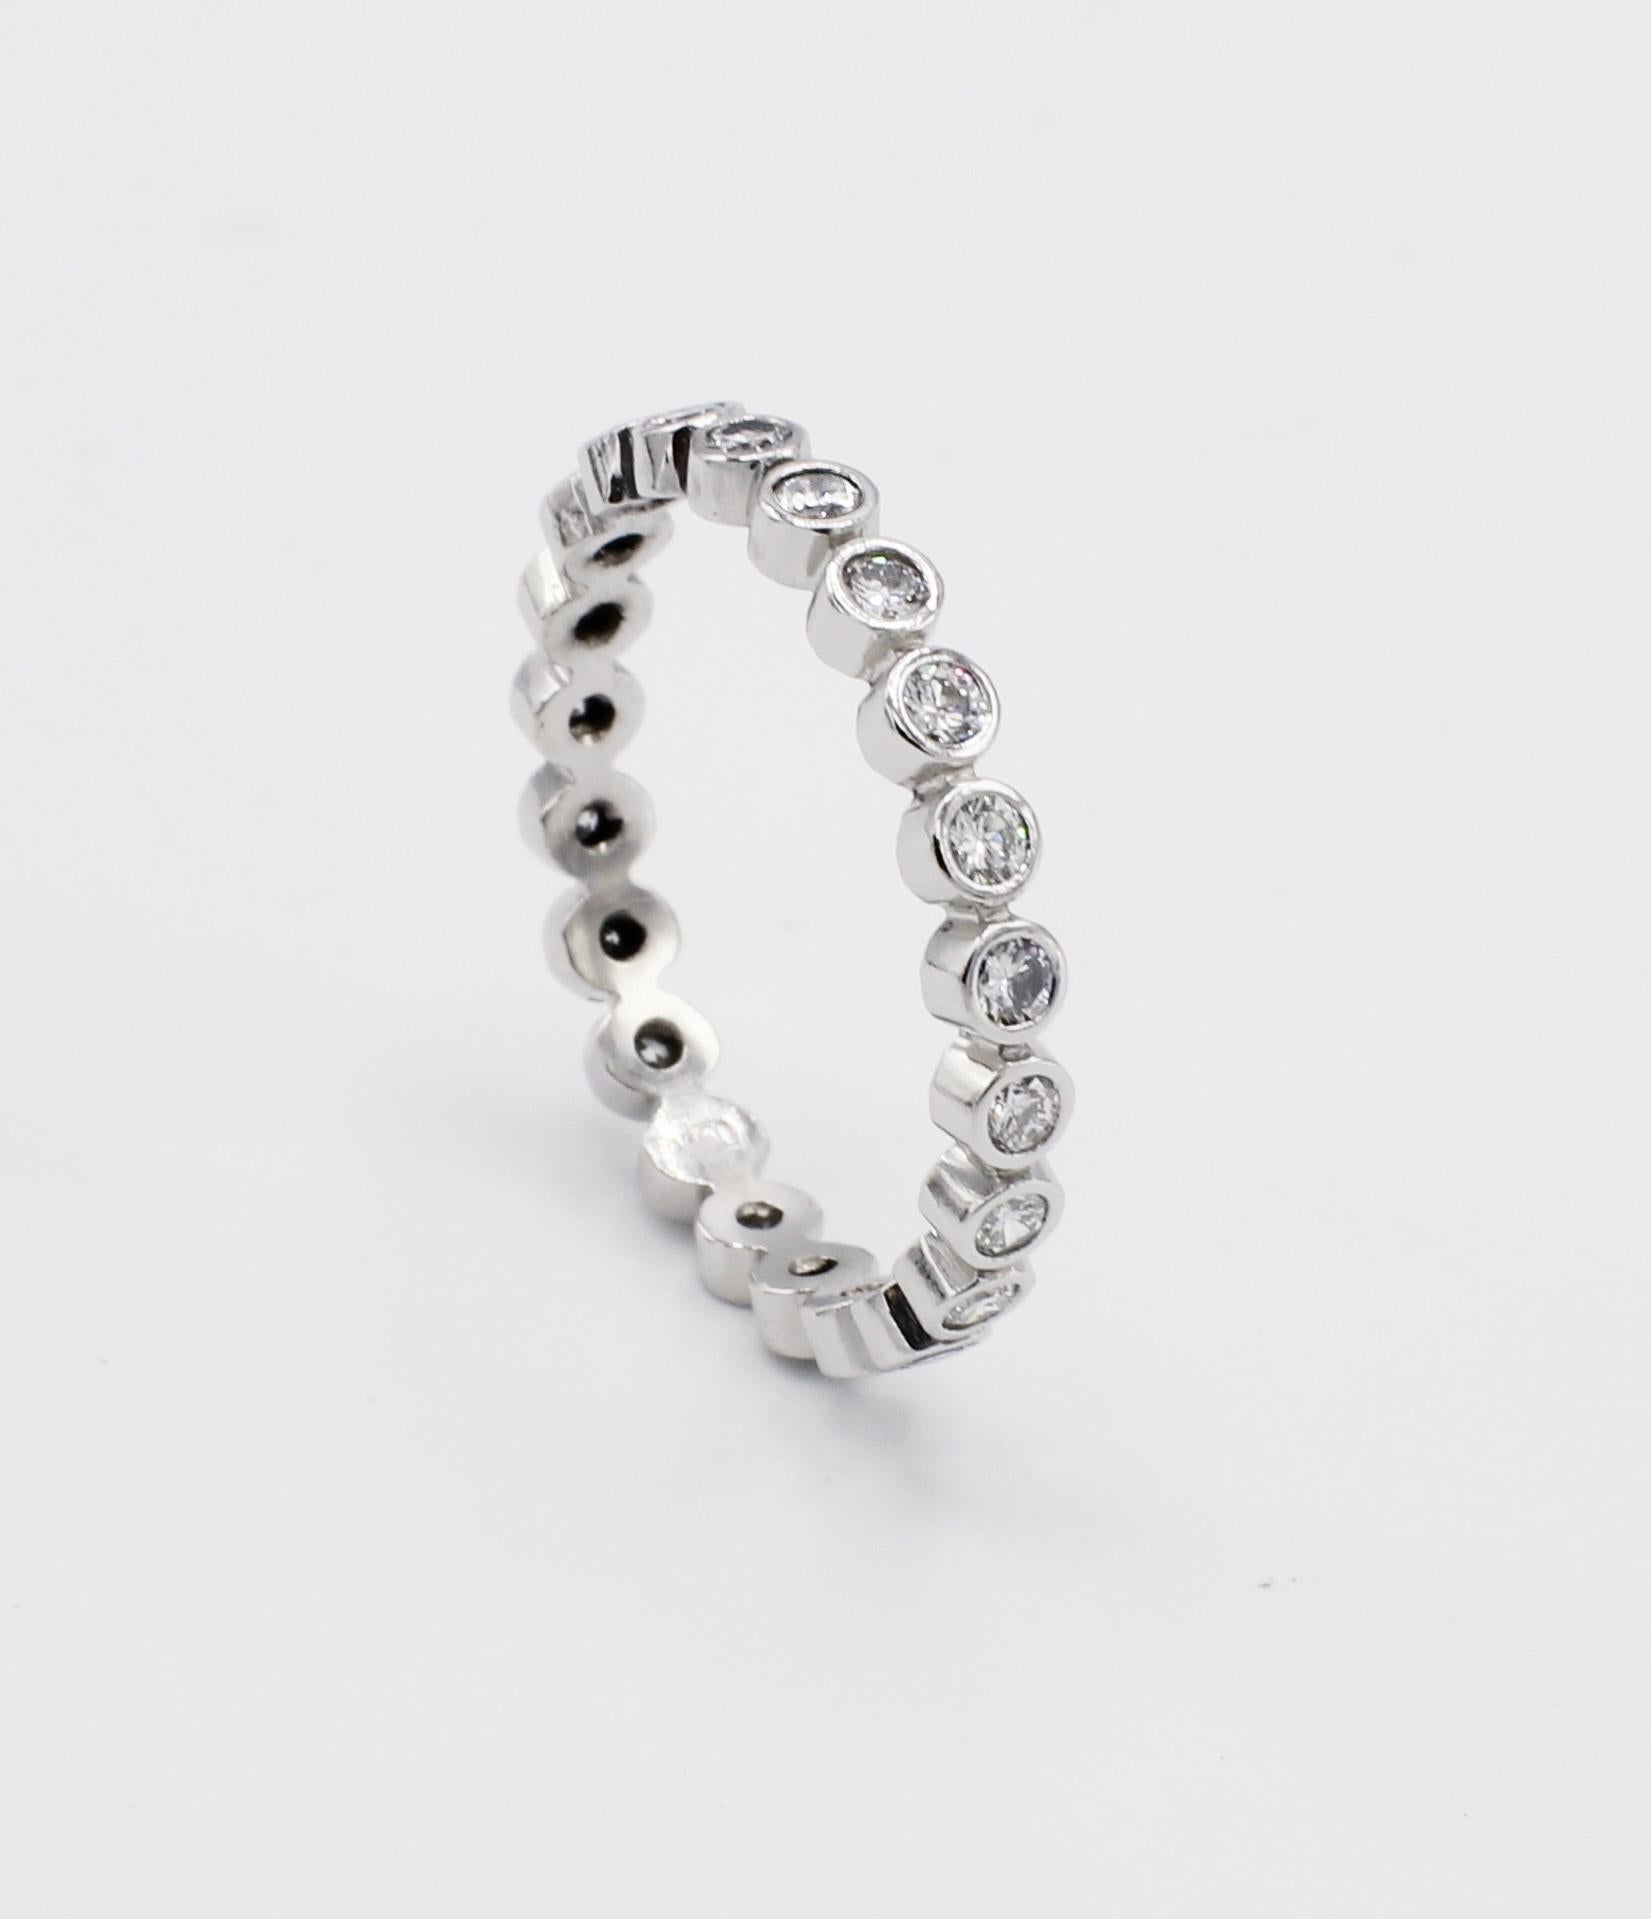 Platinum .70 Carat Bezel Set Diamond Eternity Band Ring Size 6.5
Metal: Platinum
Weight: 2.55 grams
Diamonds: Approx. .70 CTW G VS
Width: 2.5mm
Size: 6.5 (US)
